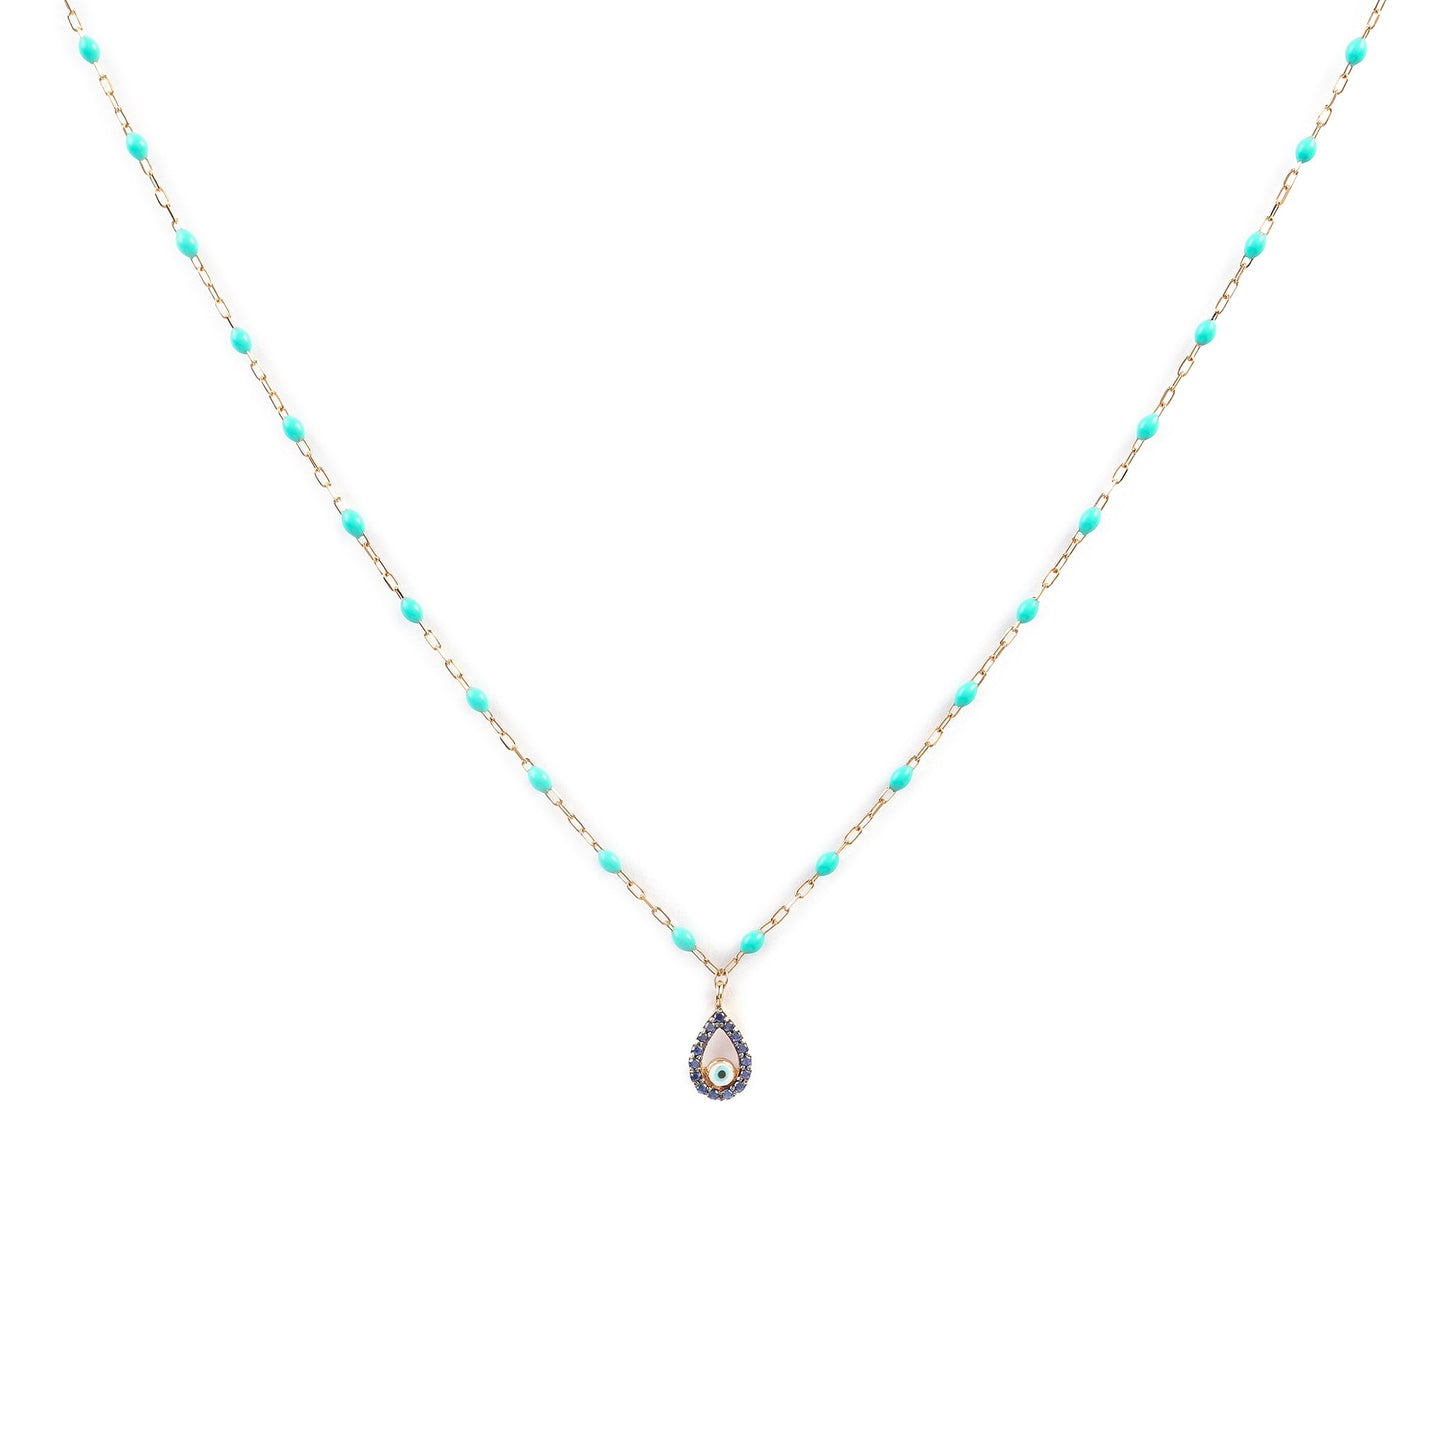 The turquoise sanctuary necklace - Oria.jewelry